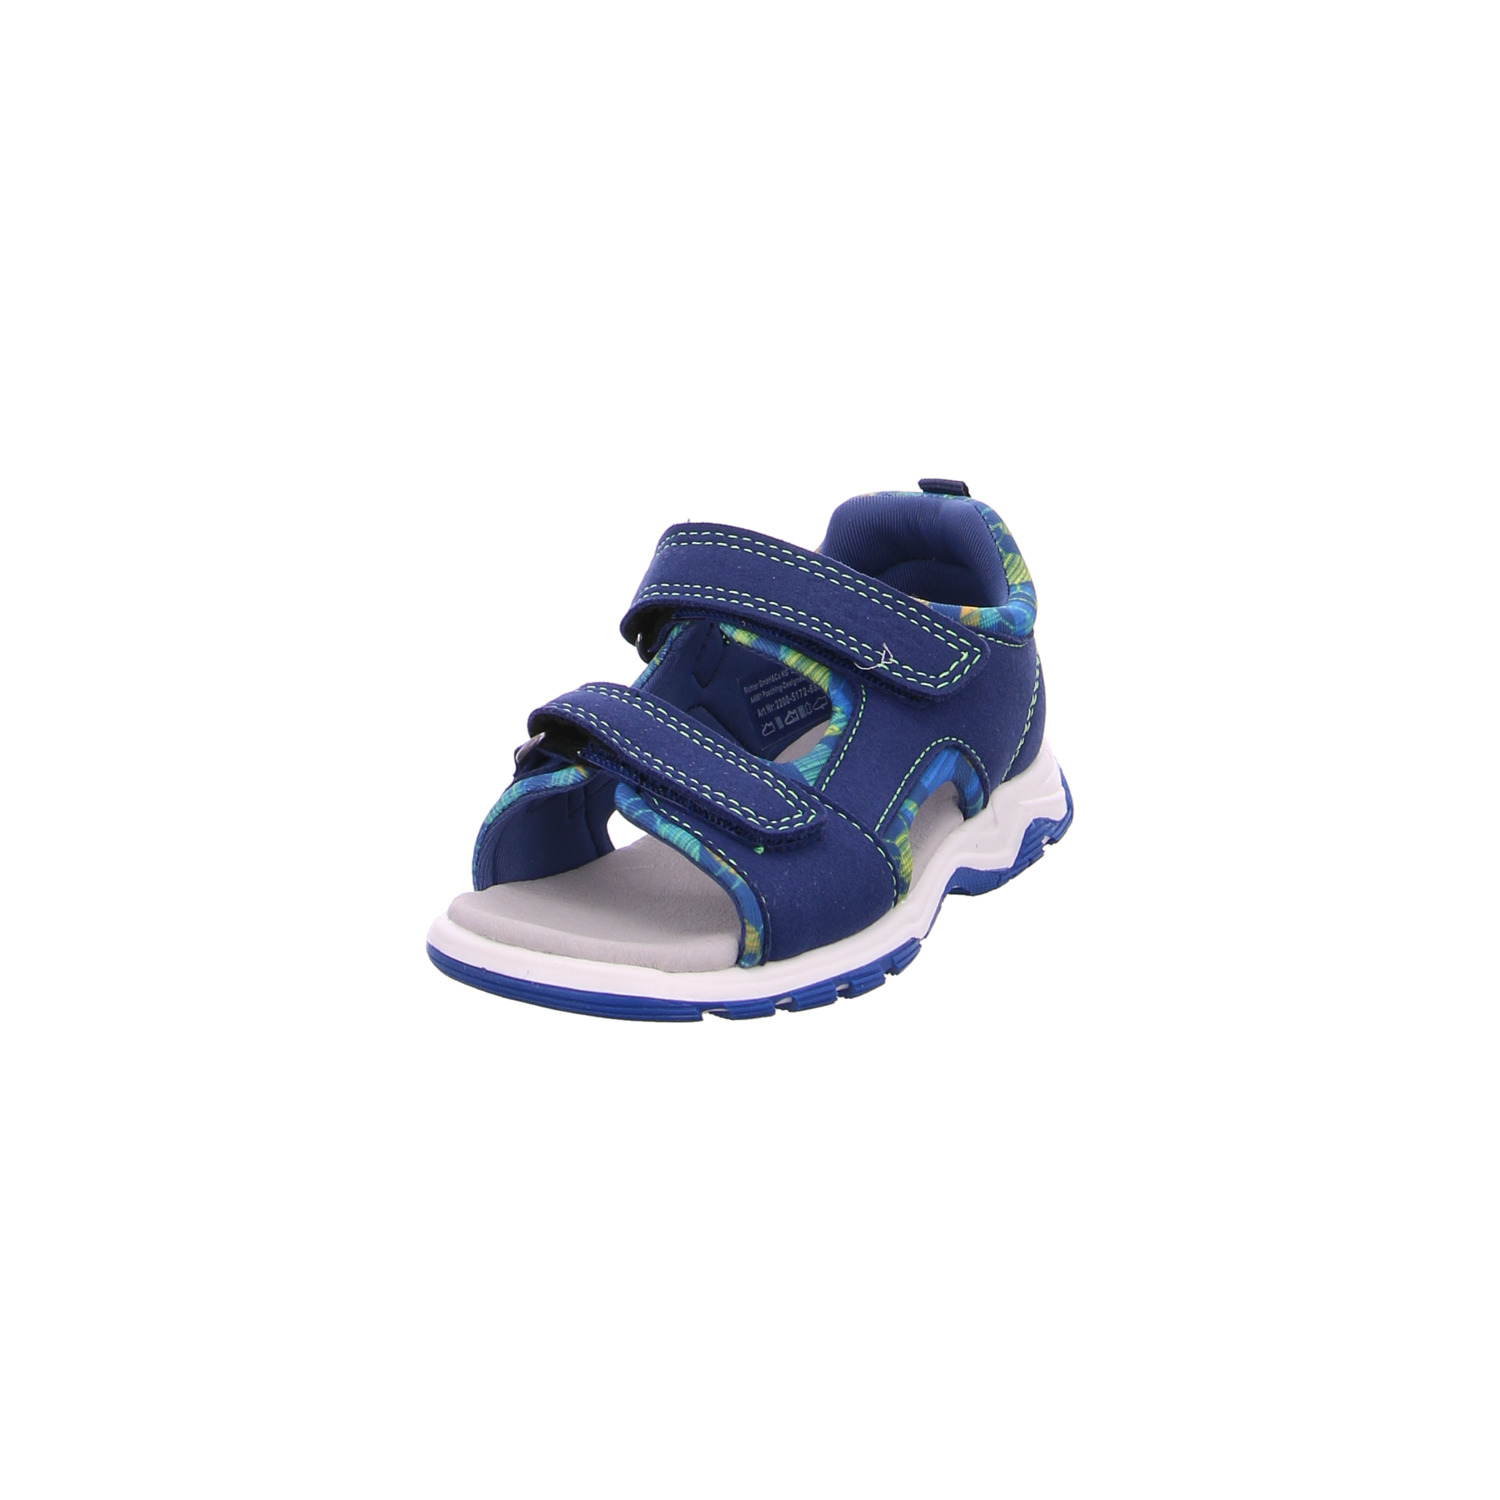 richter-kinder-sandaletten-jungen-blau-119798-20